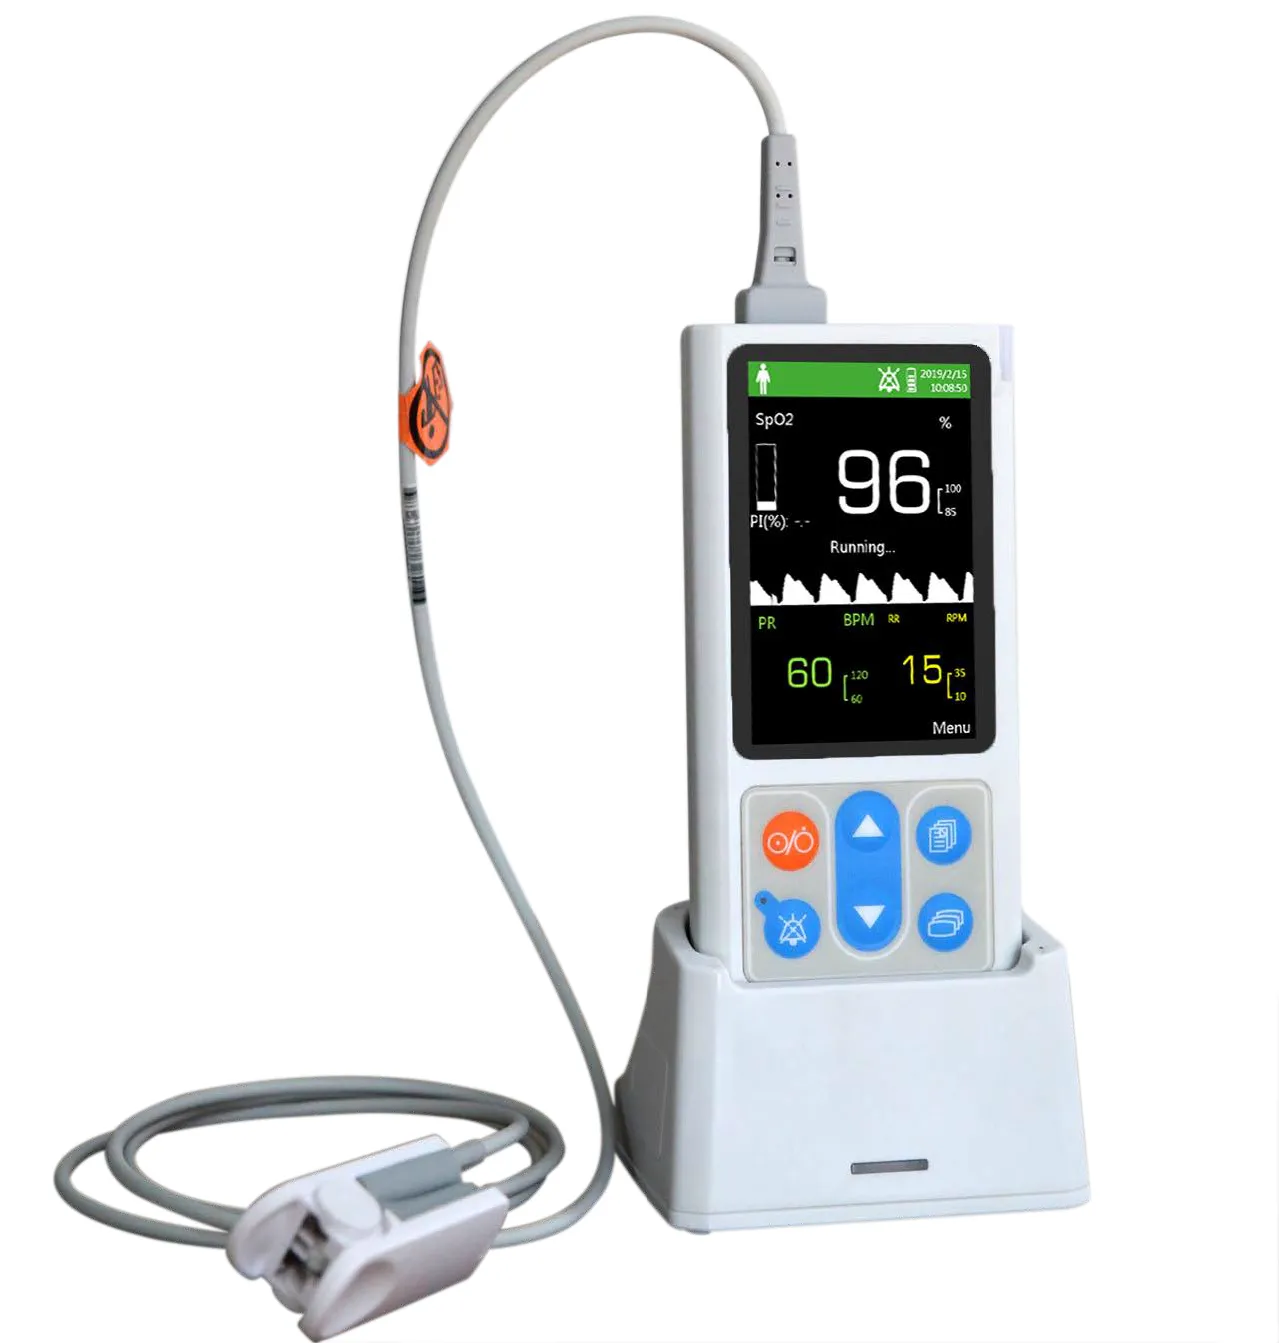 uPM60 Handheld pulse oximeter with price